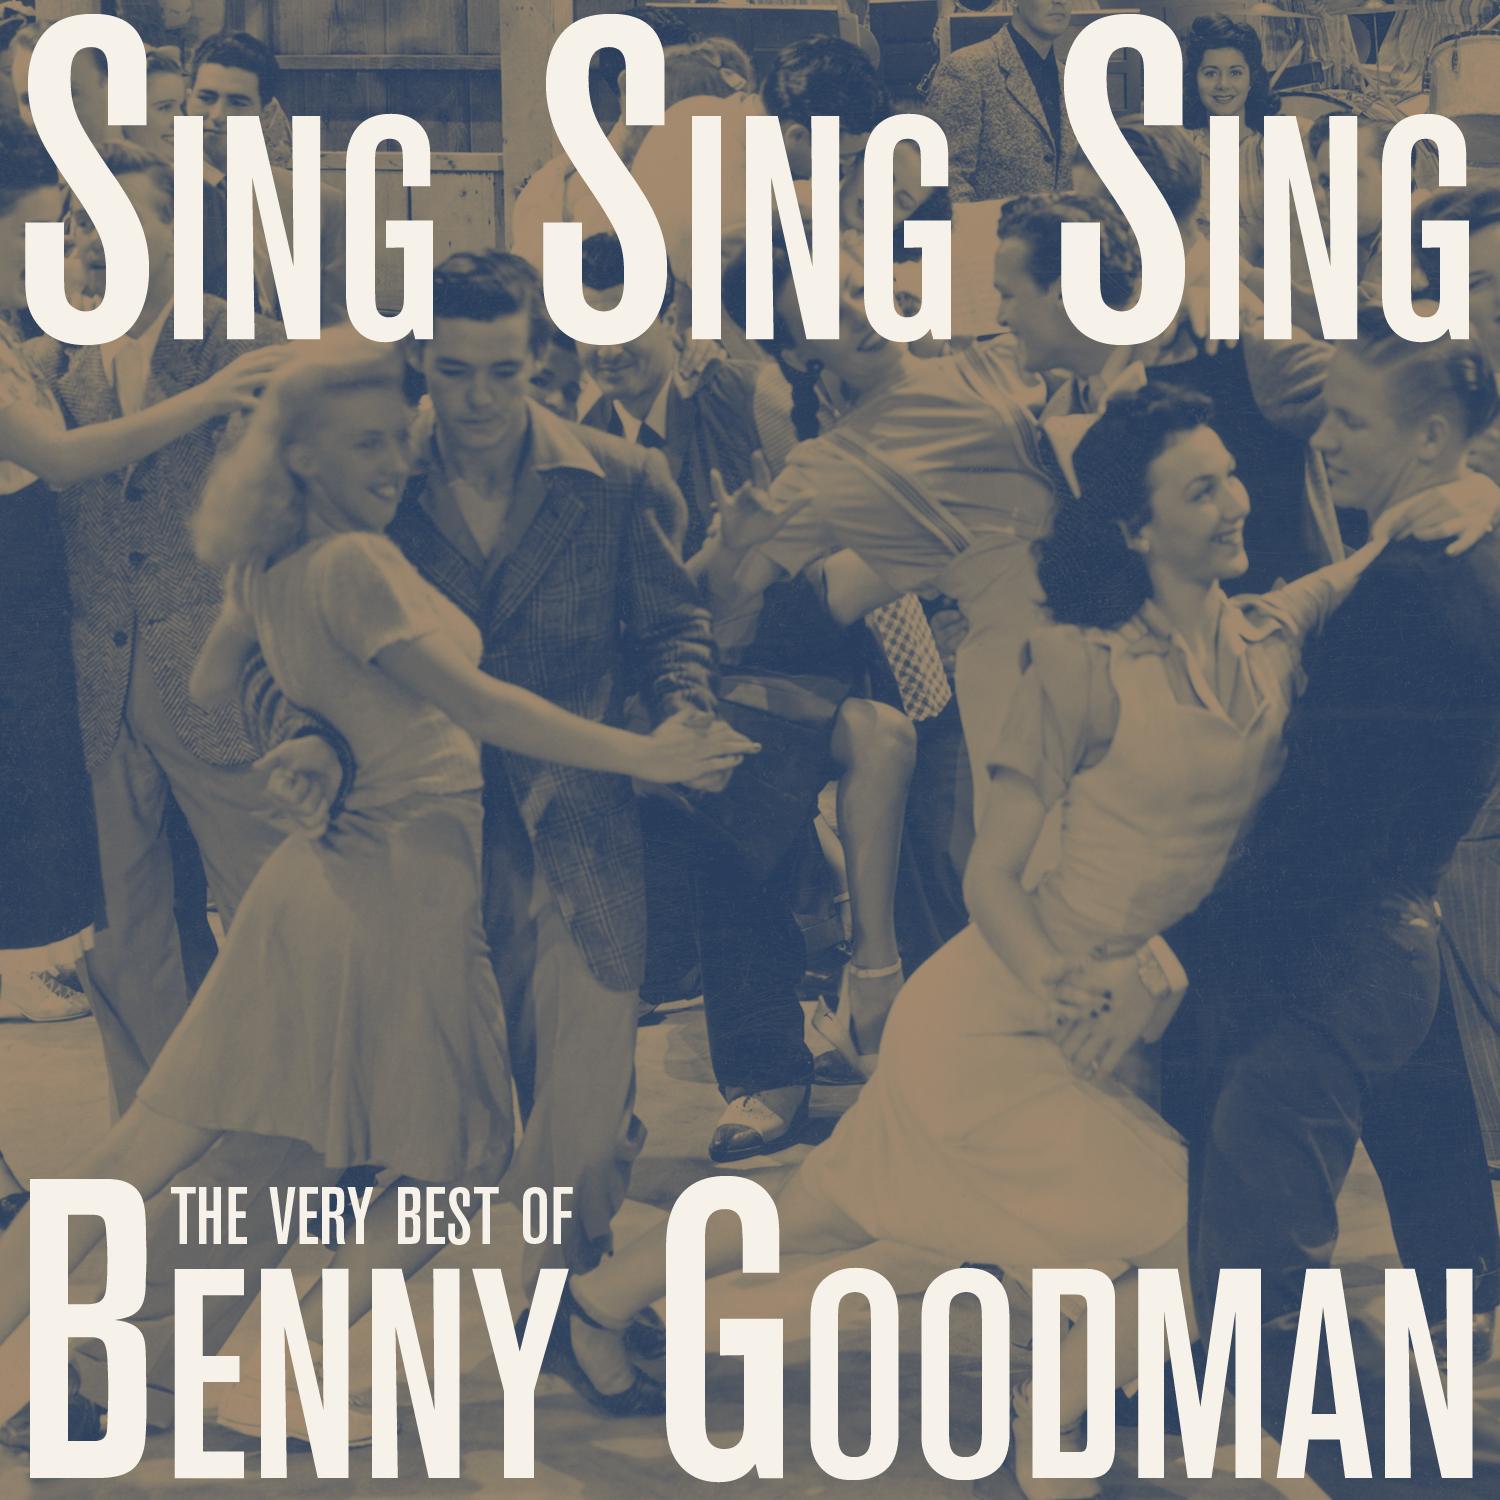 Benny Goodman - Clarinet a La King